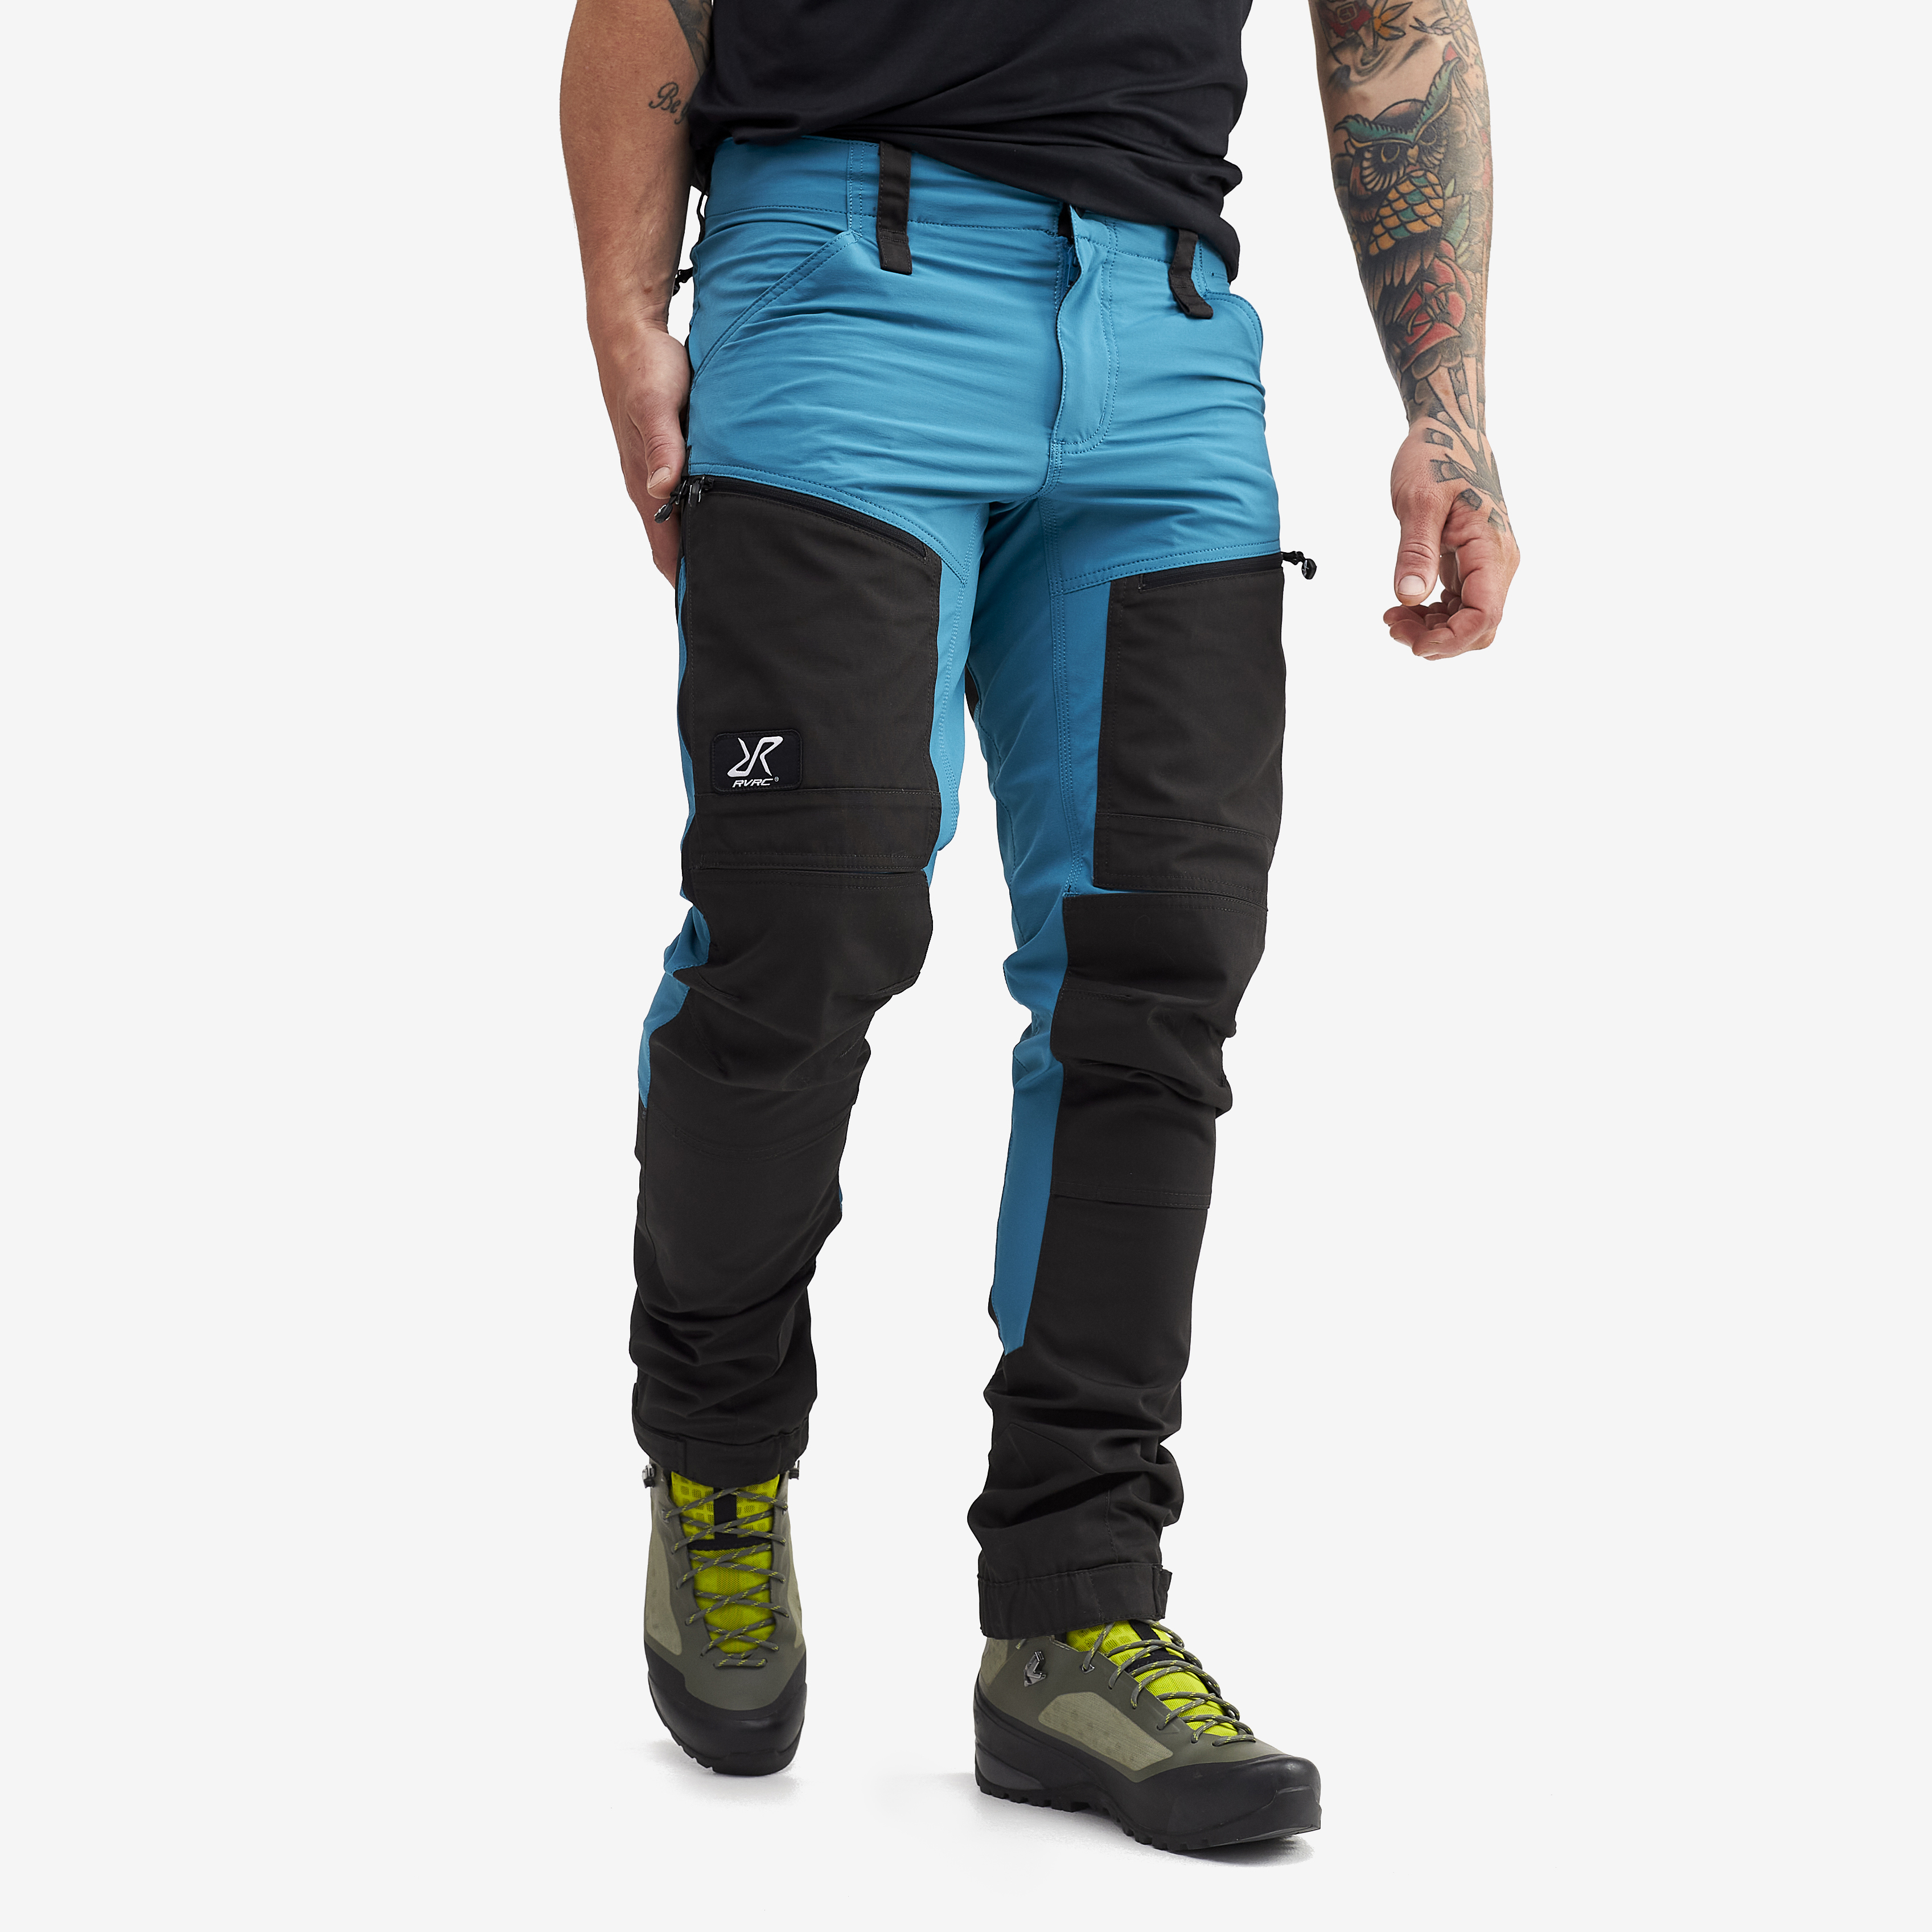 RVRC GP Pro hiking pants for men in blue